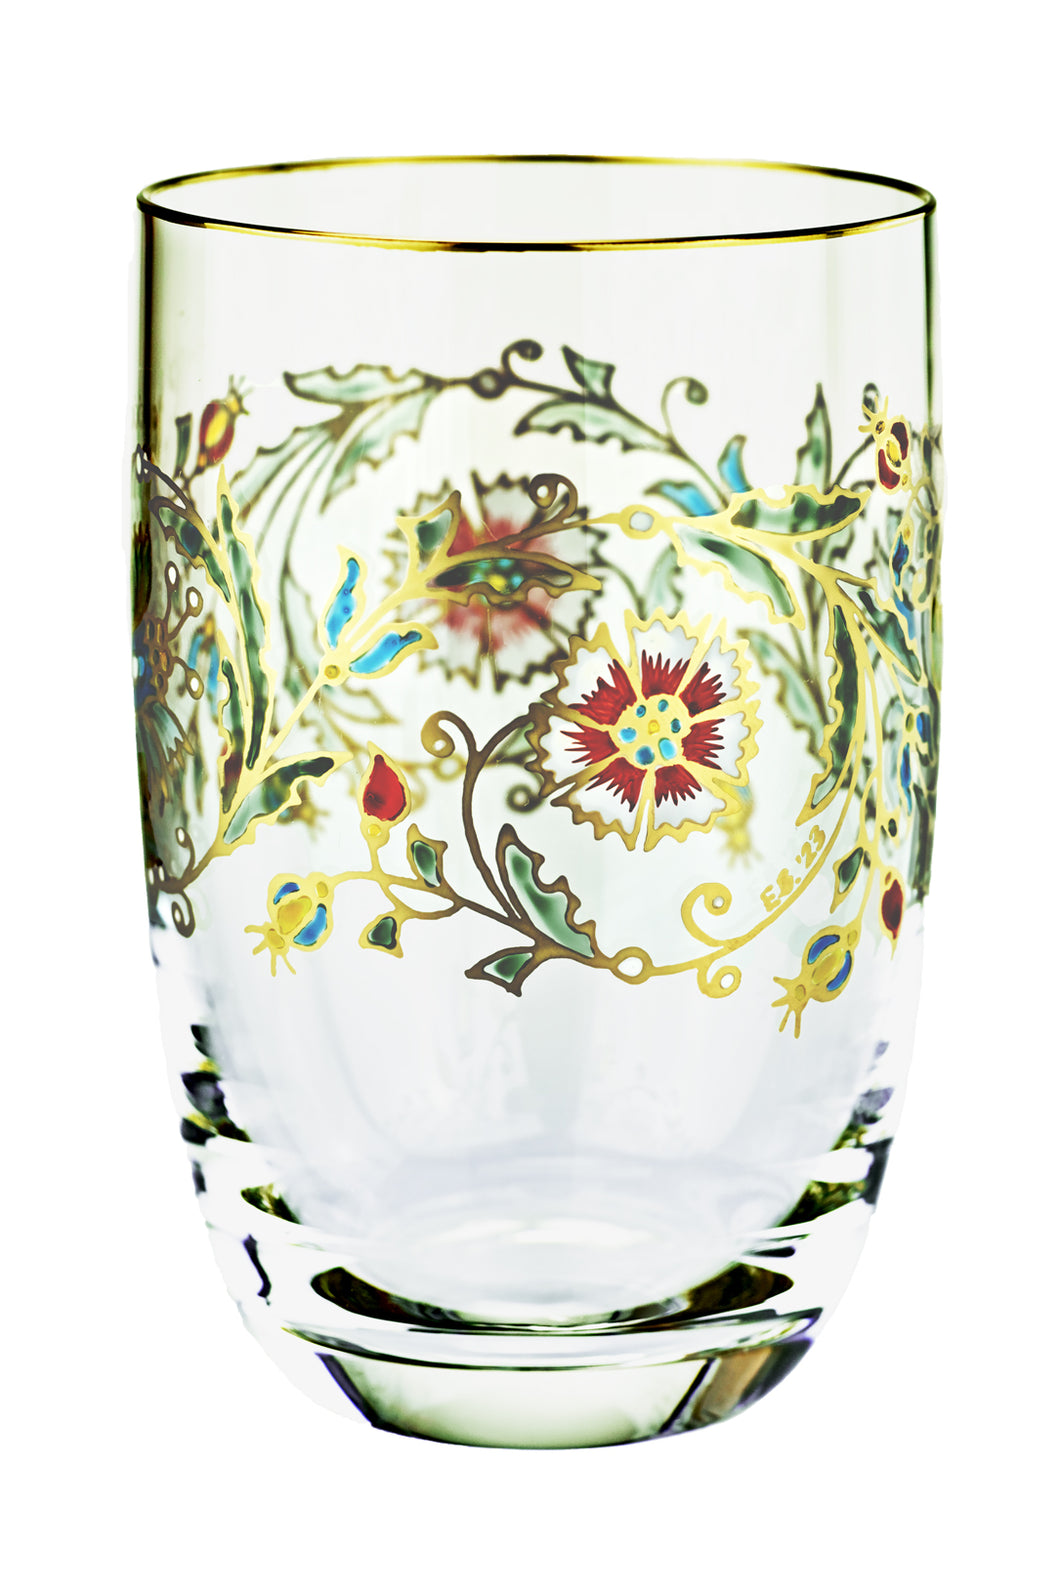 ELISABETH klar, florale Handmalerei - Becher 115 mm